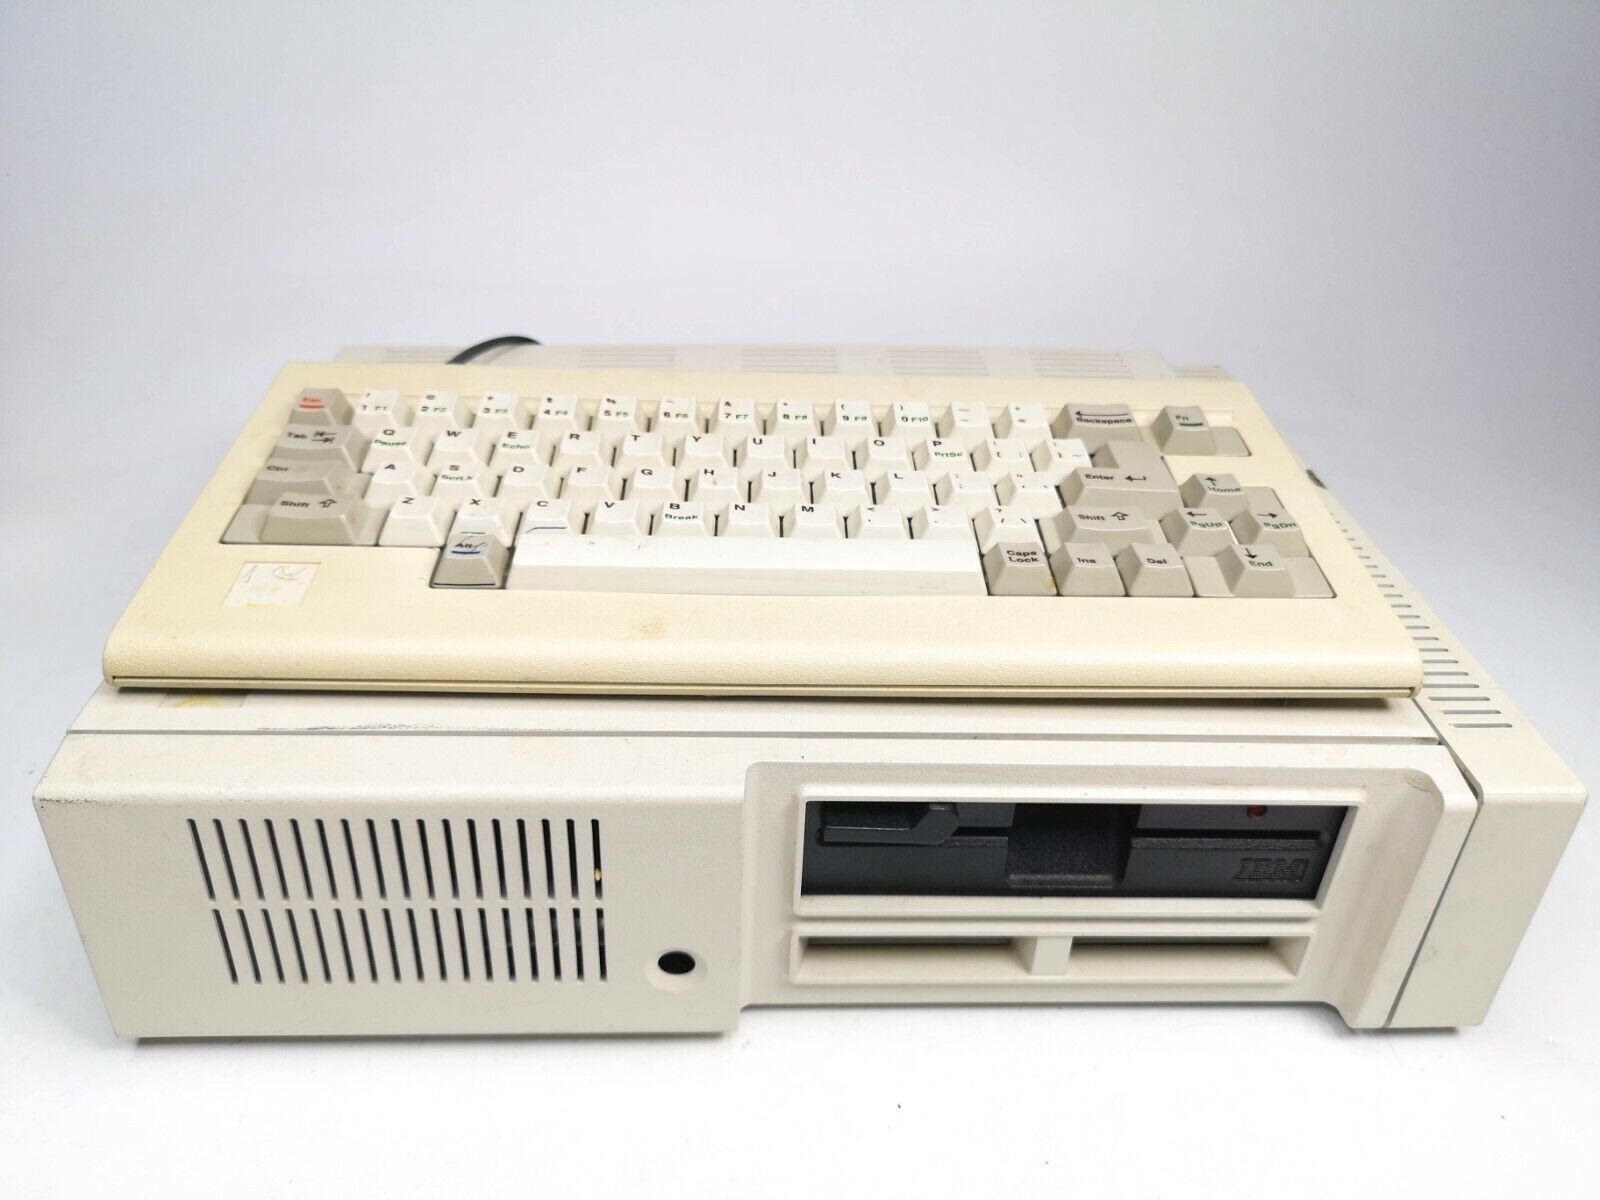 Vintager IBM Personal Computer Model 4860 With Keyboard LR53966 No Monitor RARE